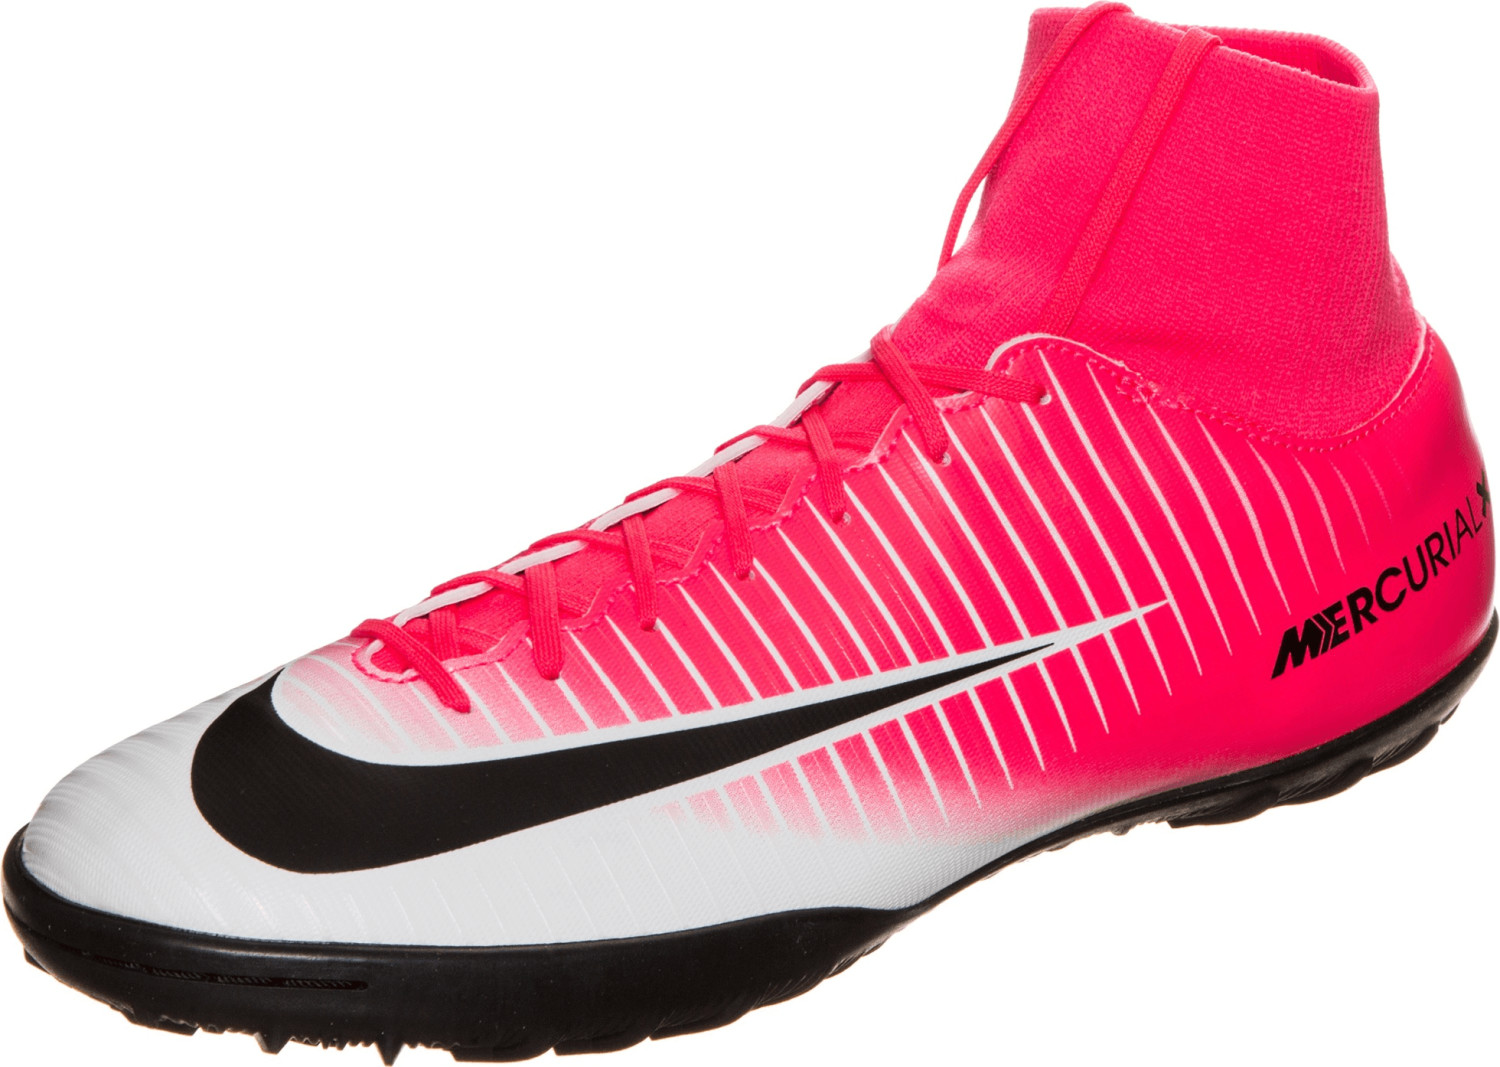 Nike MercurialX Victory VI DF TF racer pink/black/white